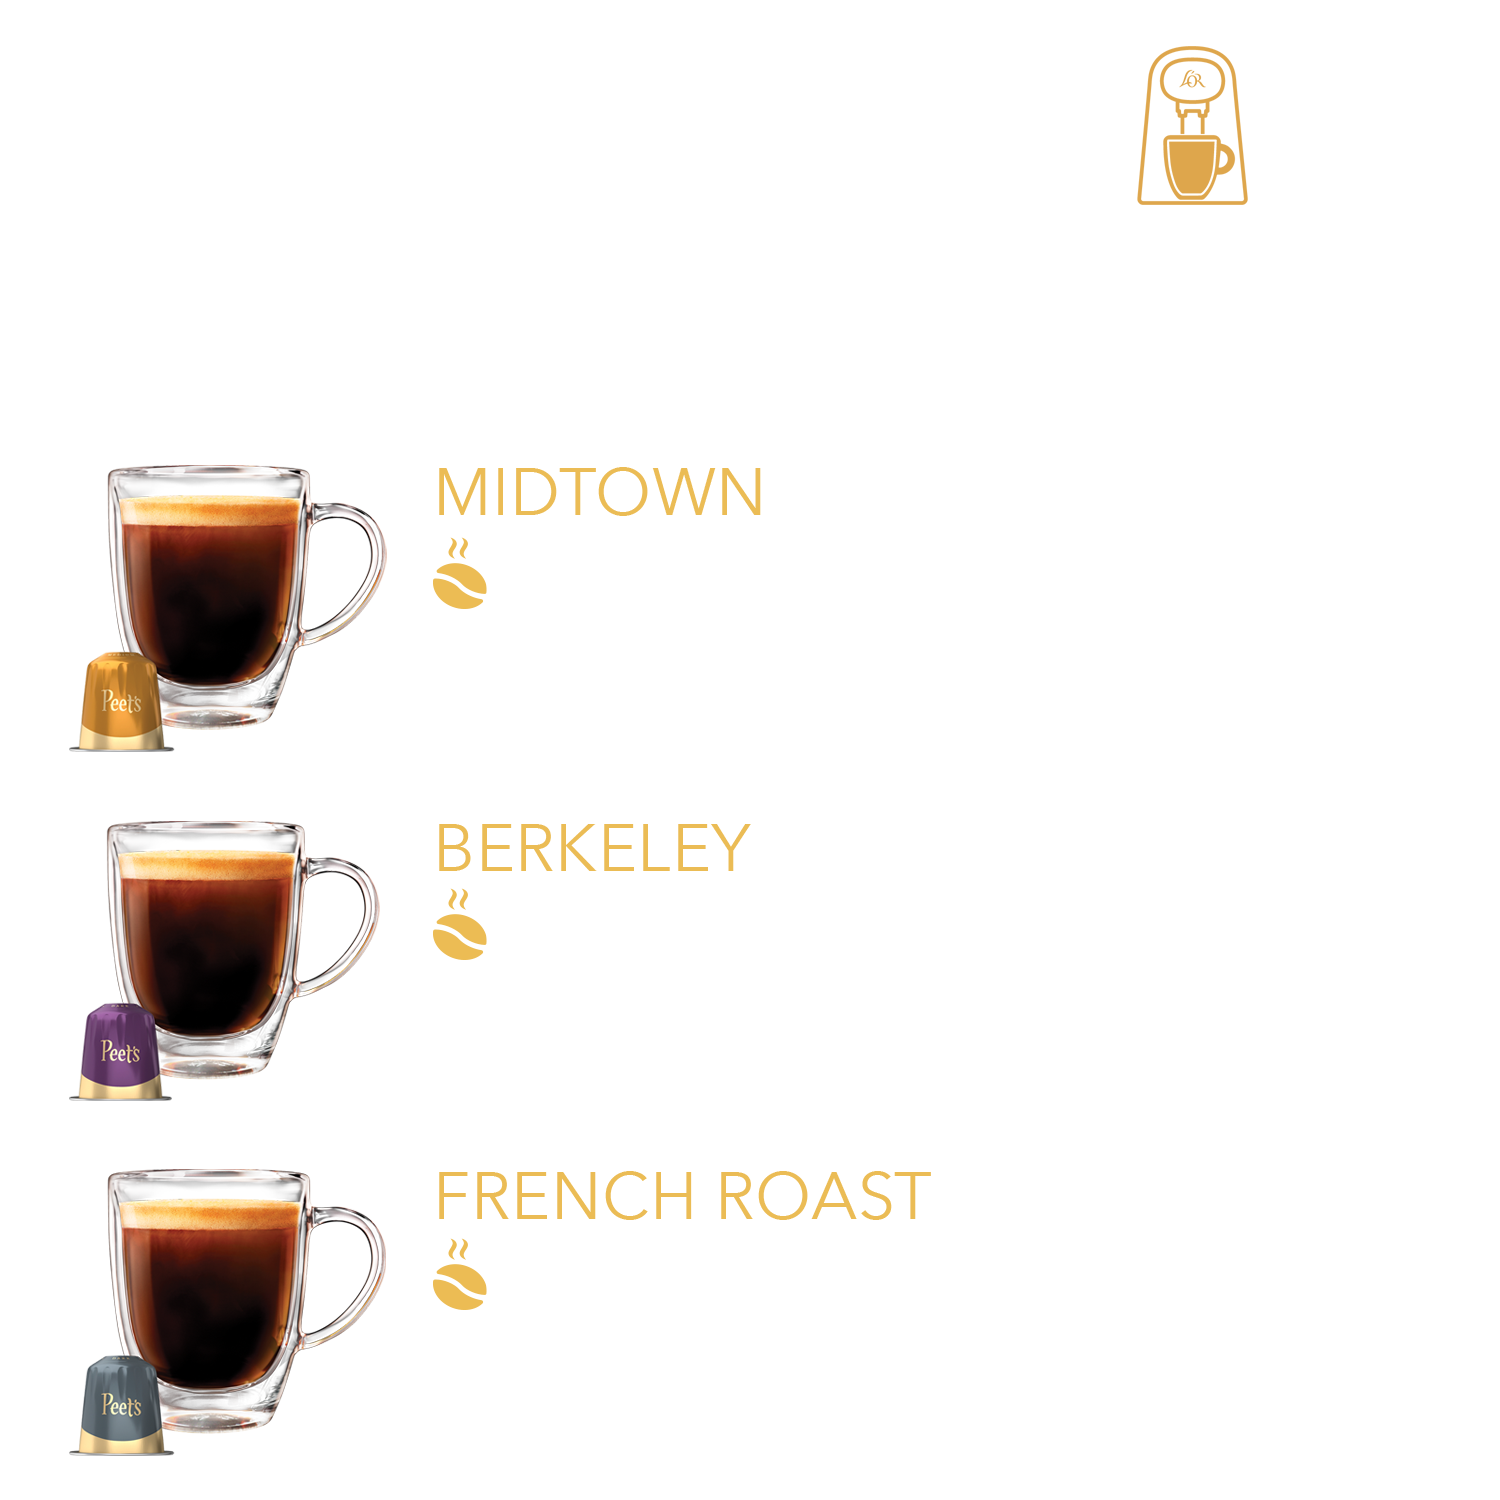 Peet's Café collection includes Peet's Midtown medium roast coffee, Peet's Berkeley dark roast coffee, and Peet's French Roast dark roast coffee. 